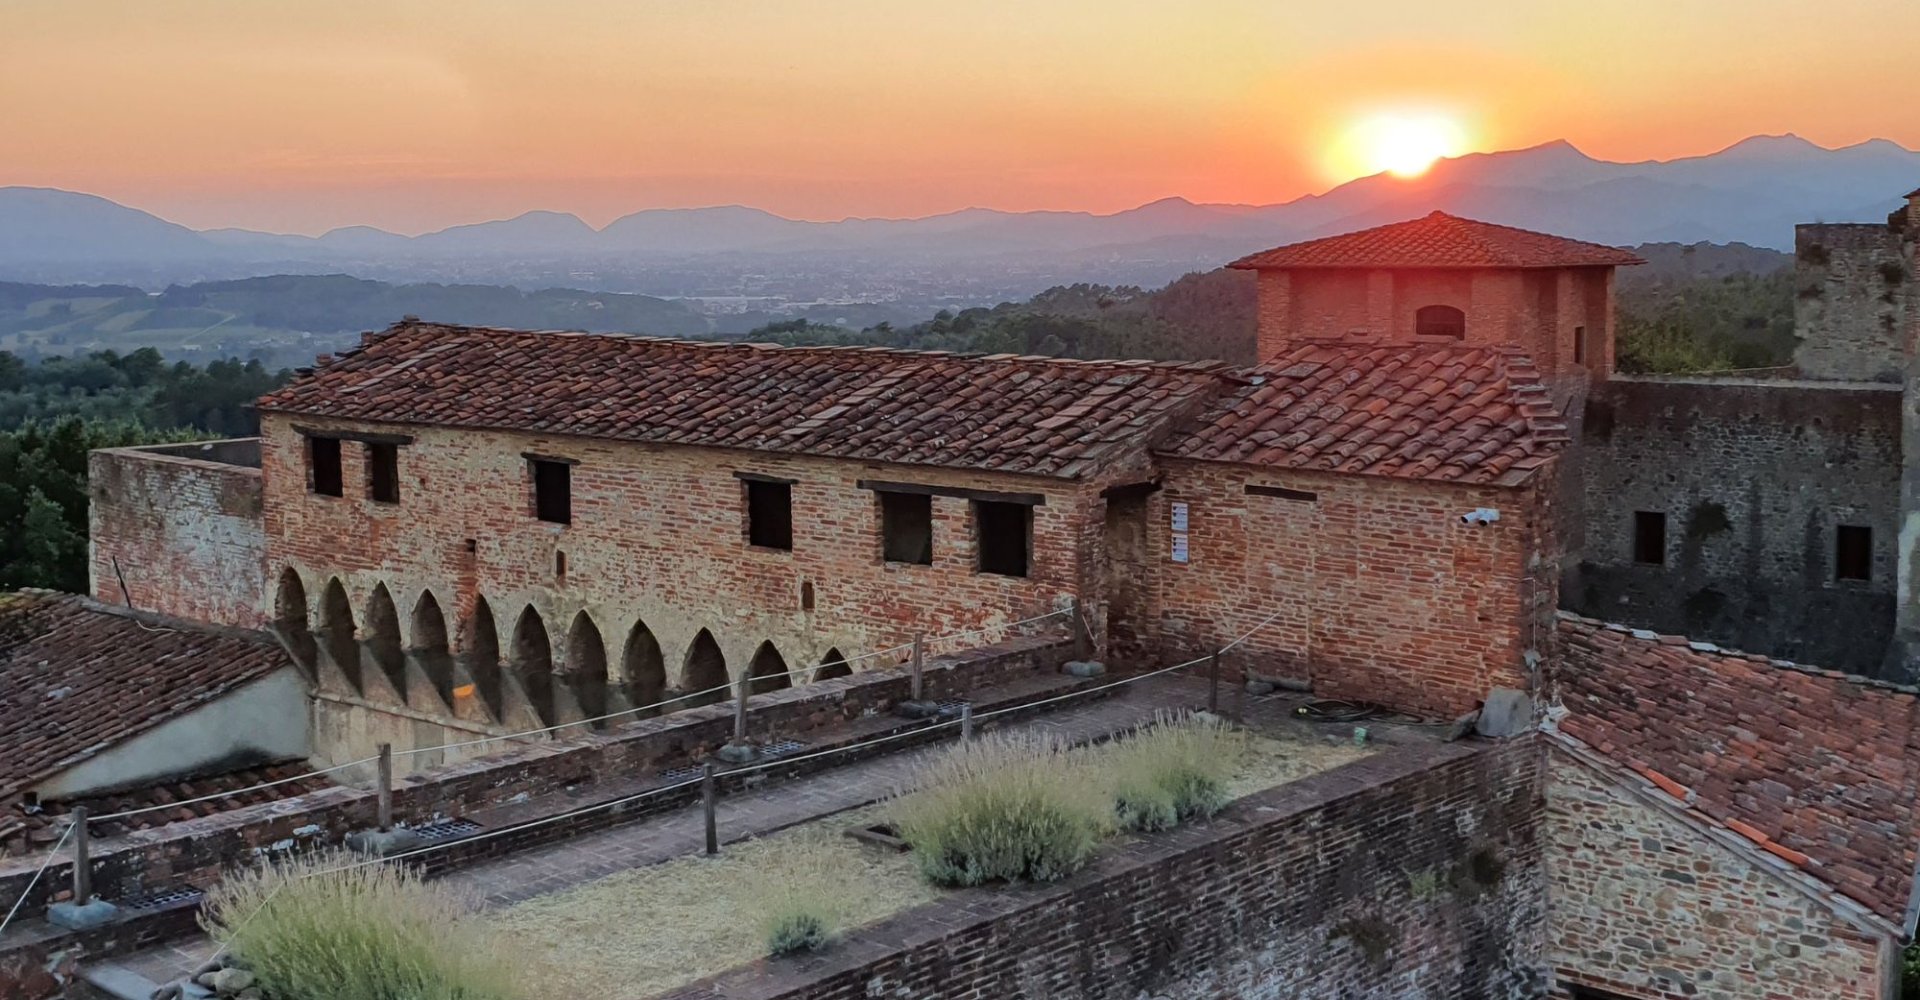 Montecarlo fortress